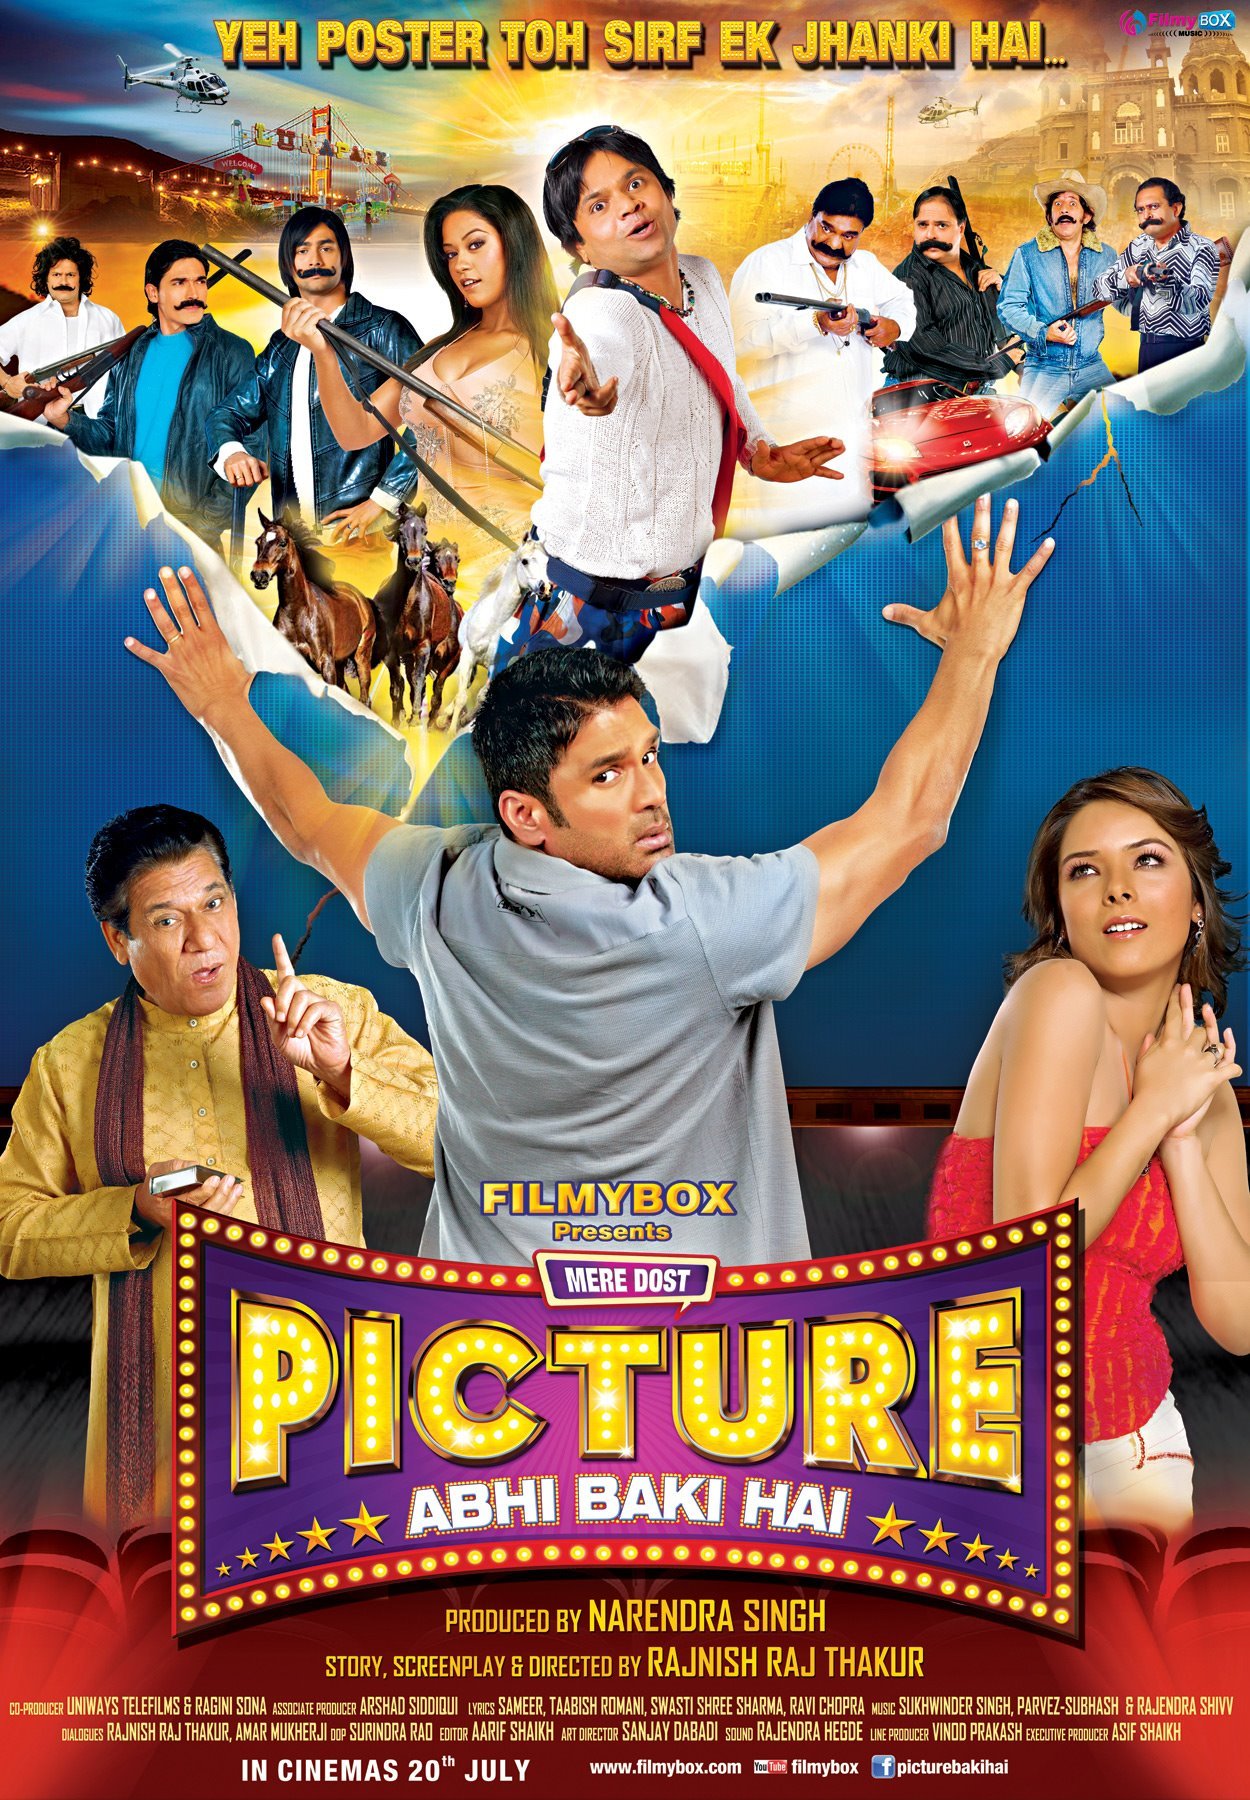 Mere Dost Picture Abhi Baki Hai (2012) (Hindi Movie / Bollywood Film / Indian Cinema DVD)